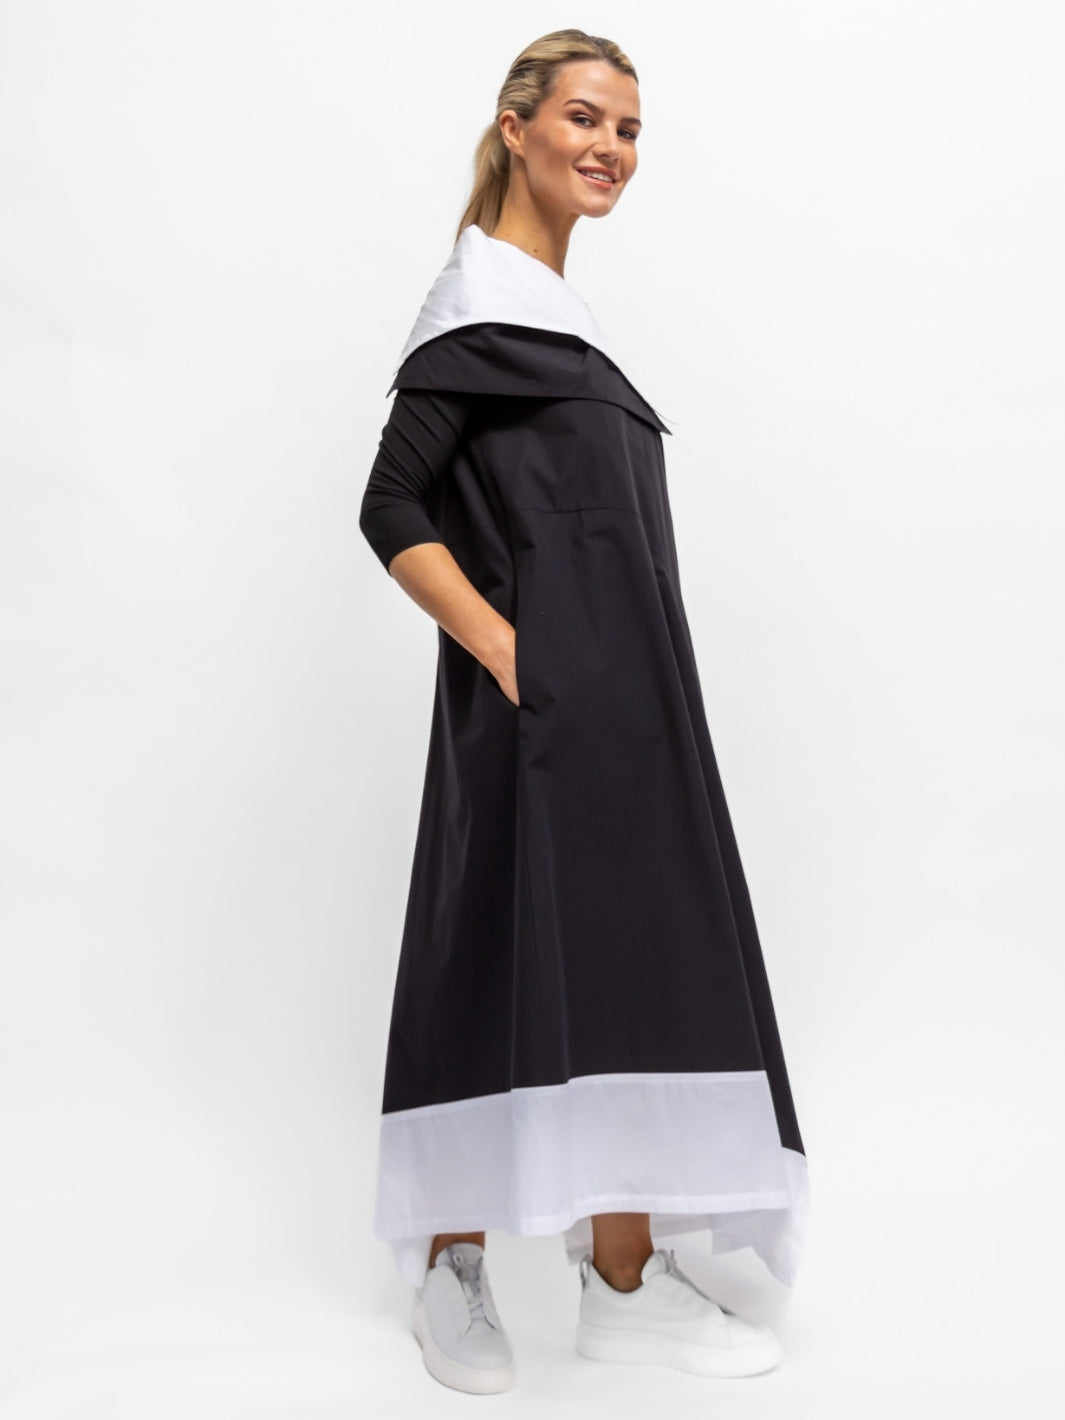 Xenia Design Dress Xenia OPLI Dress in Black with White